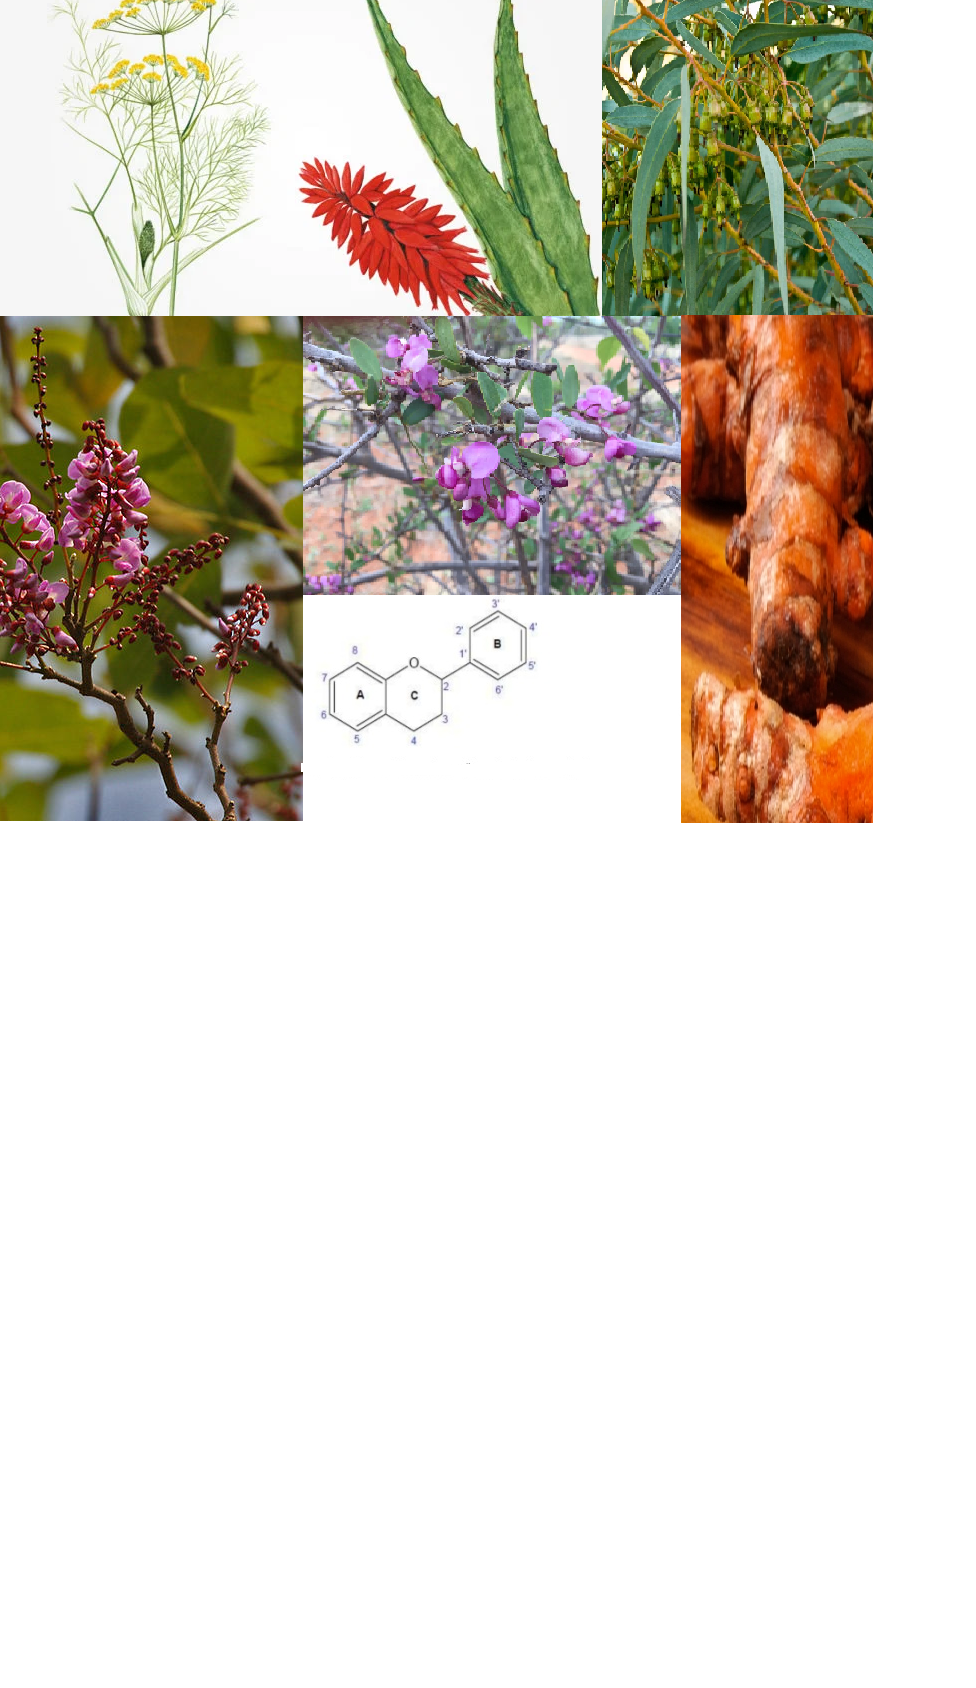 					Visualizar v. 7 n. fluxocontinuo (2021): Plantas Medicinais & Aromaterapia
				